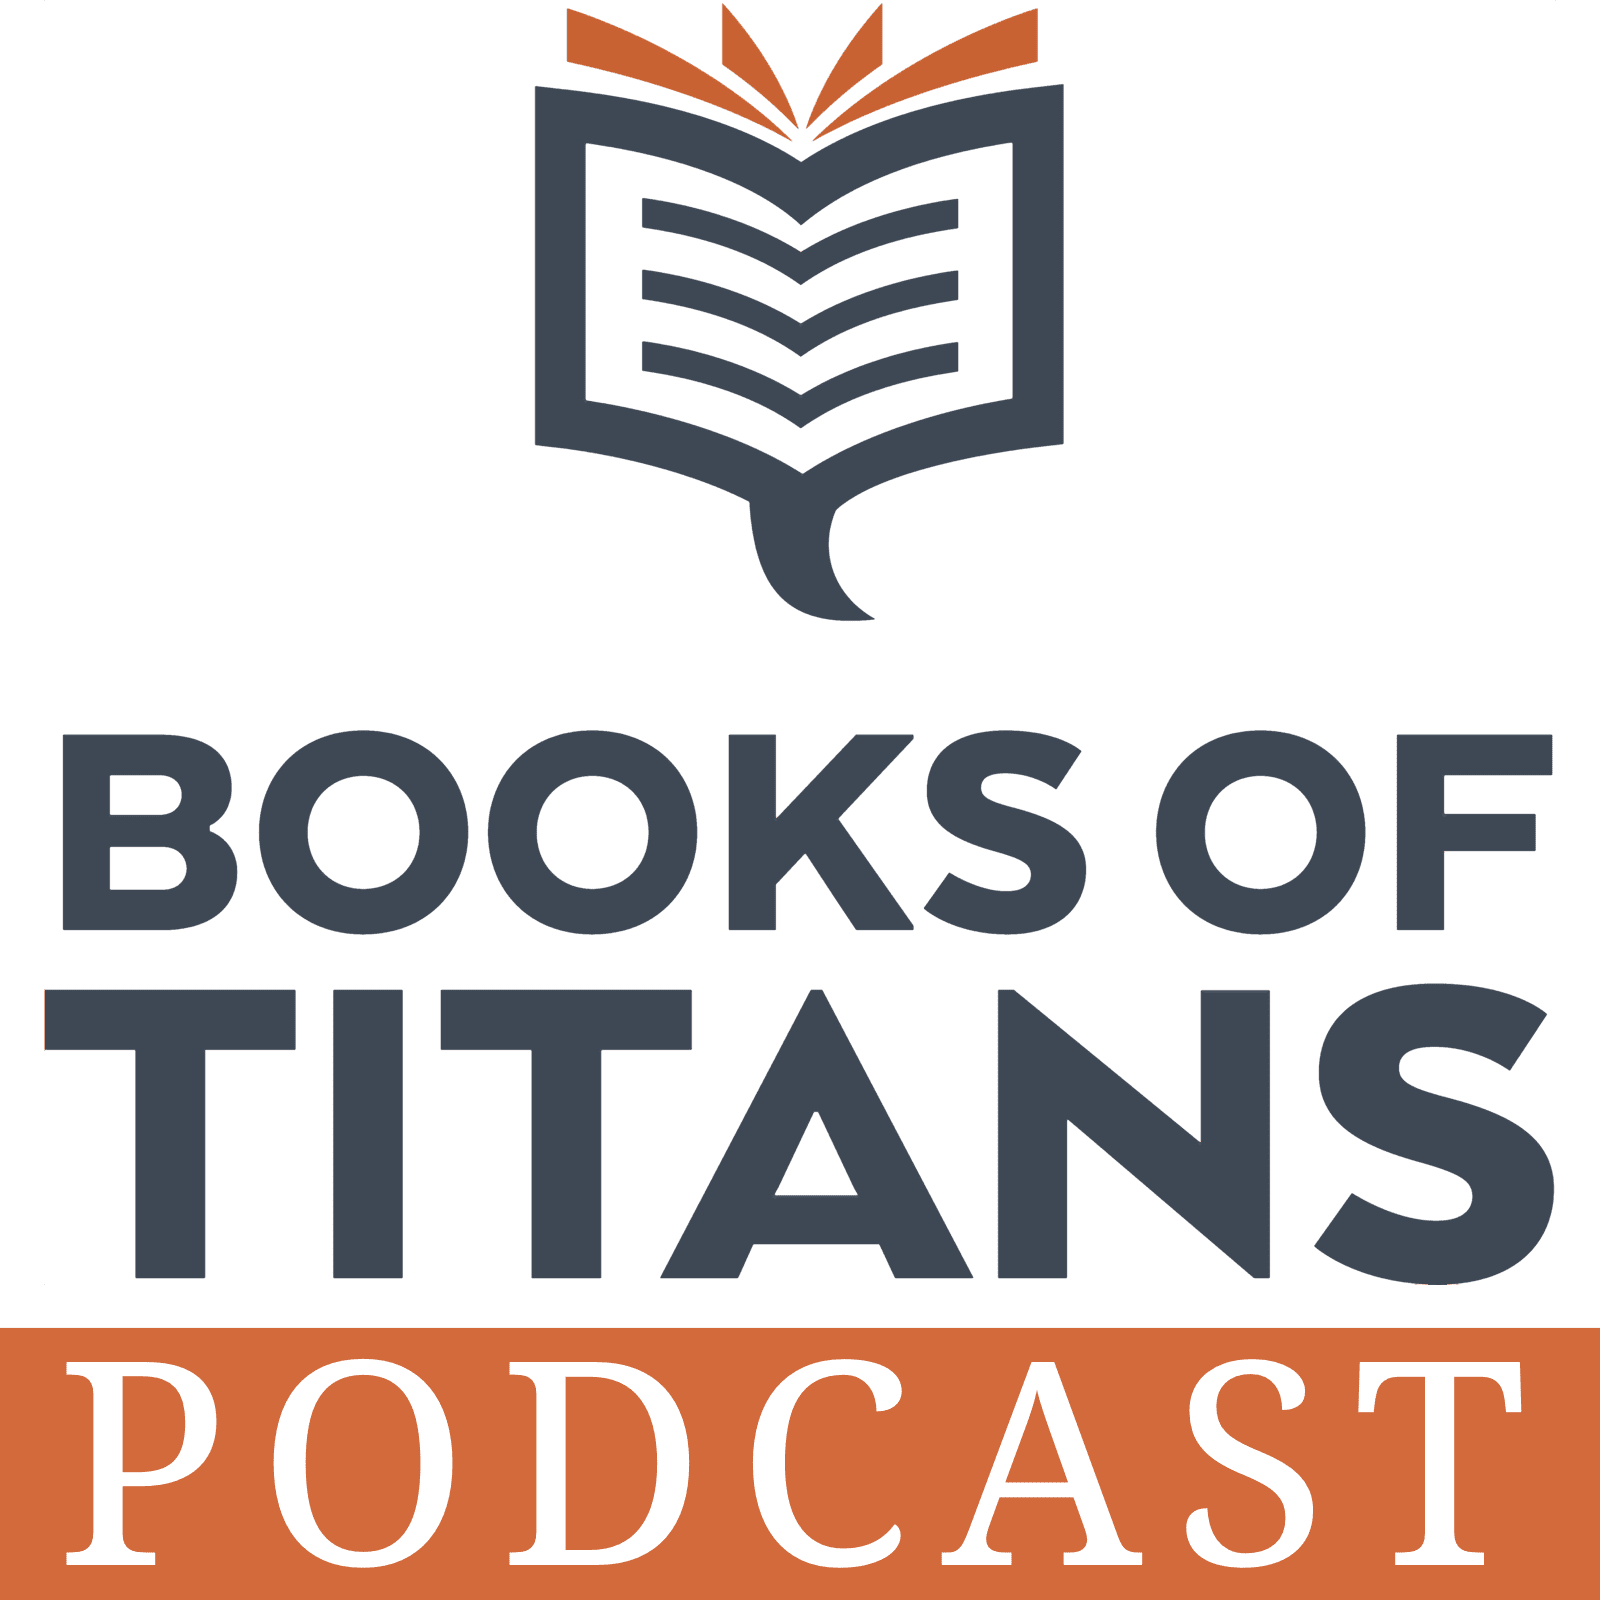 Books of Titans Podcast